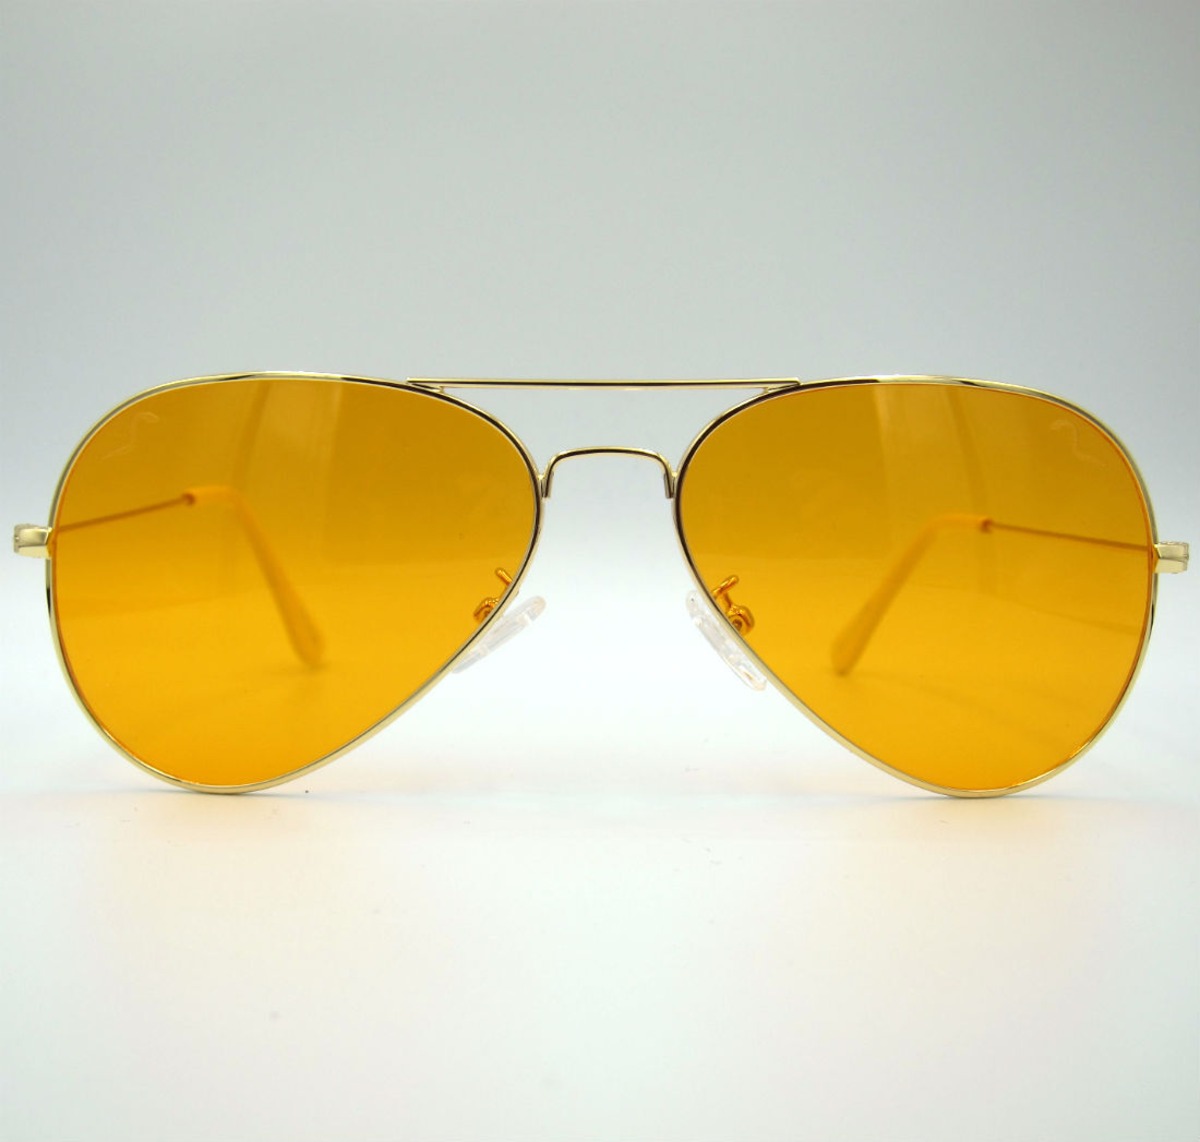 Shady Spex Tv Eye Sunglasses Gold W Orange Lenses Cycle Trash